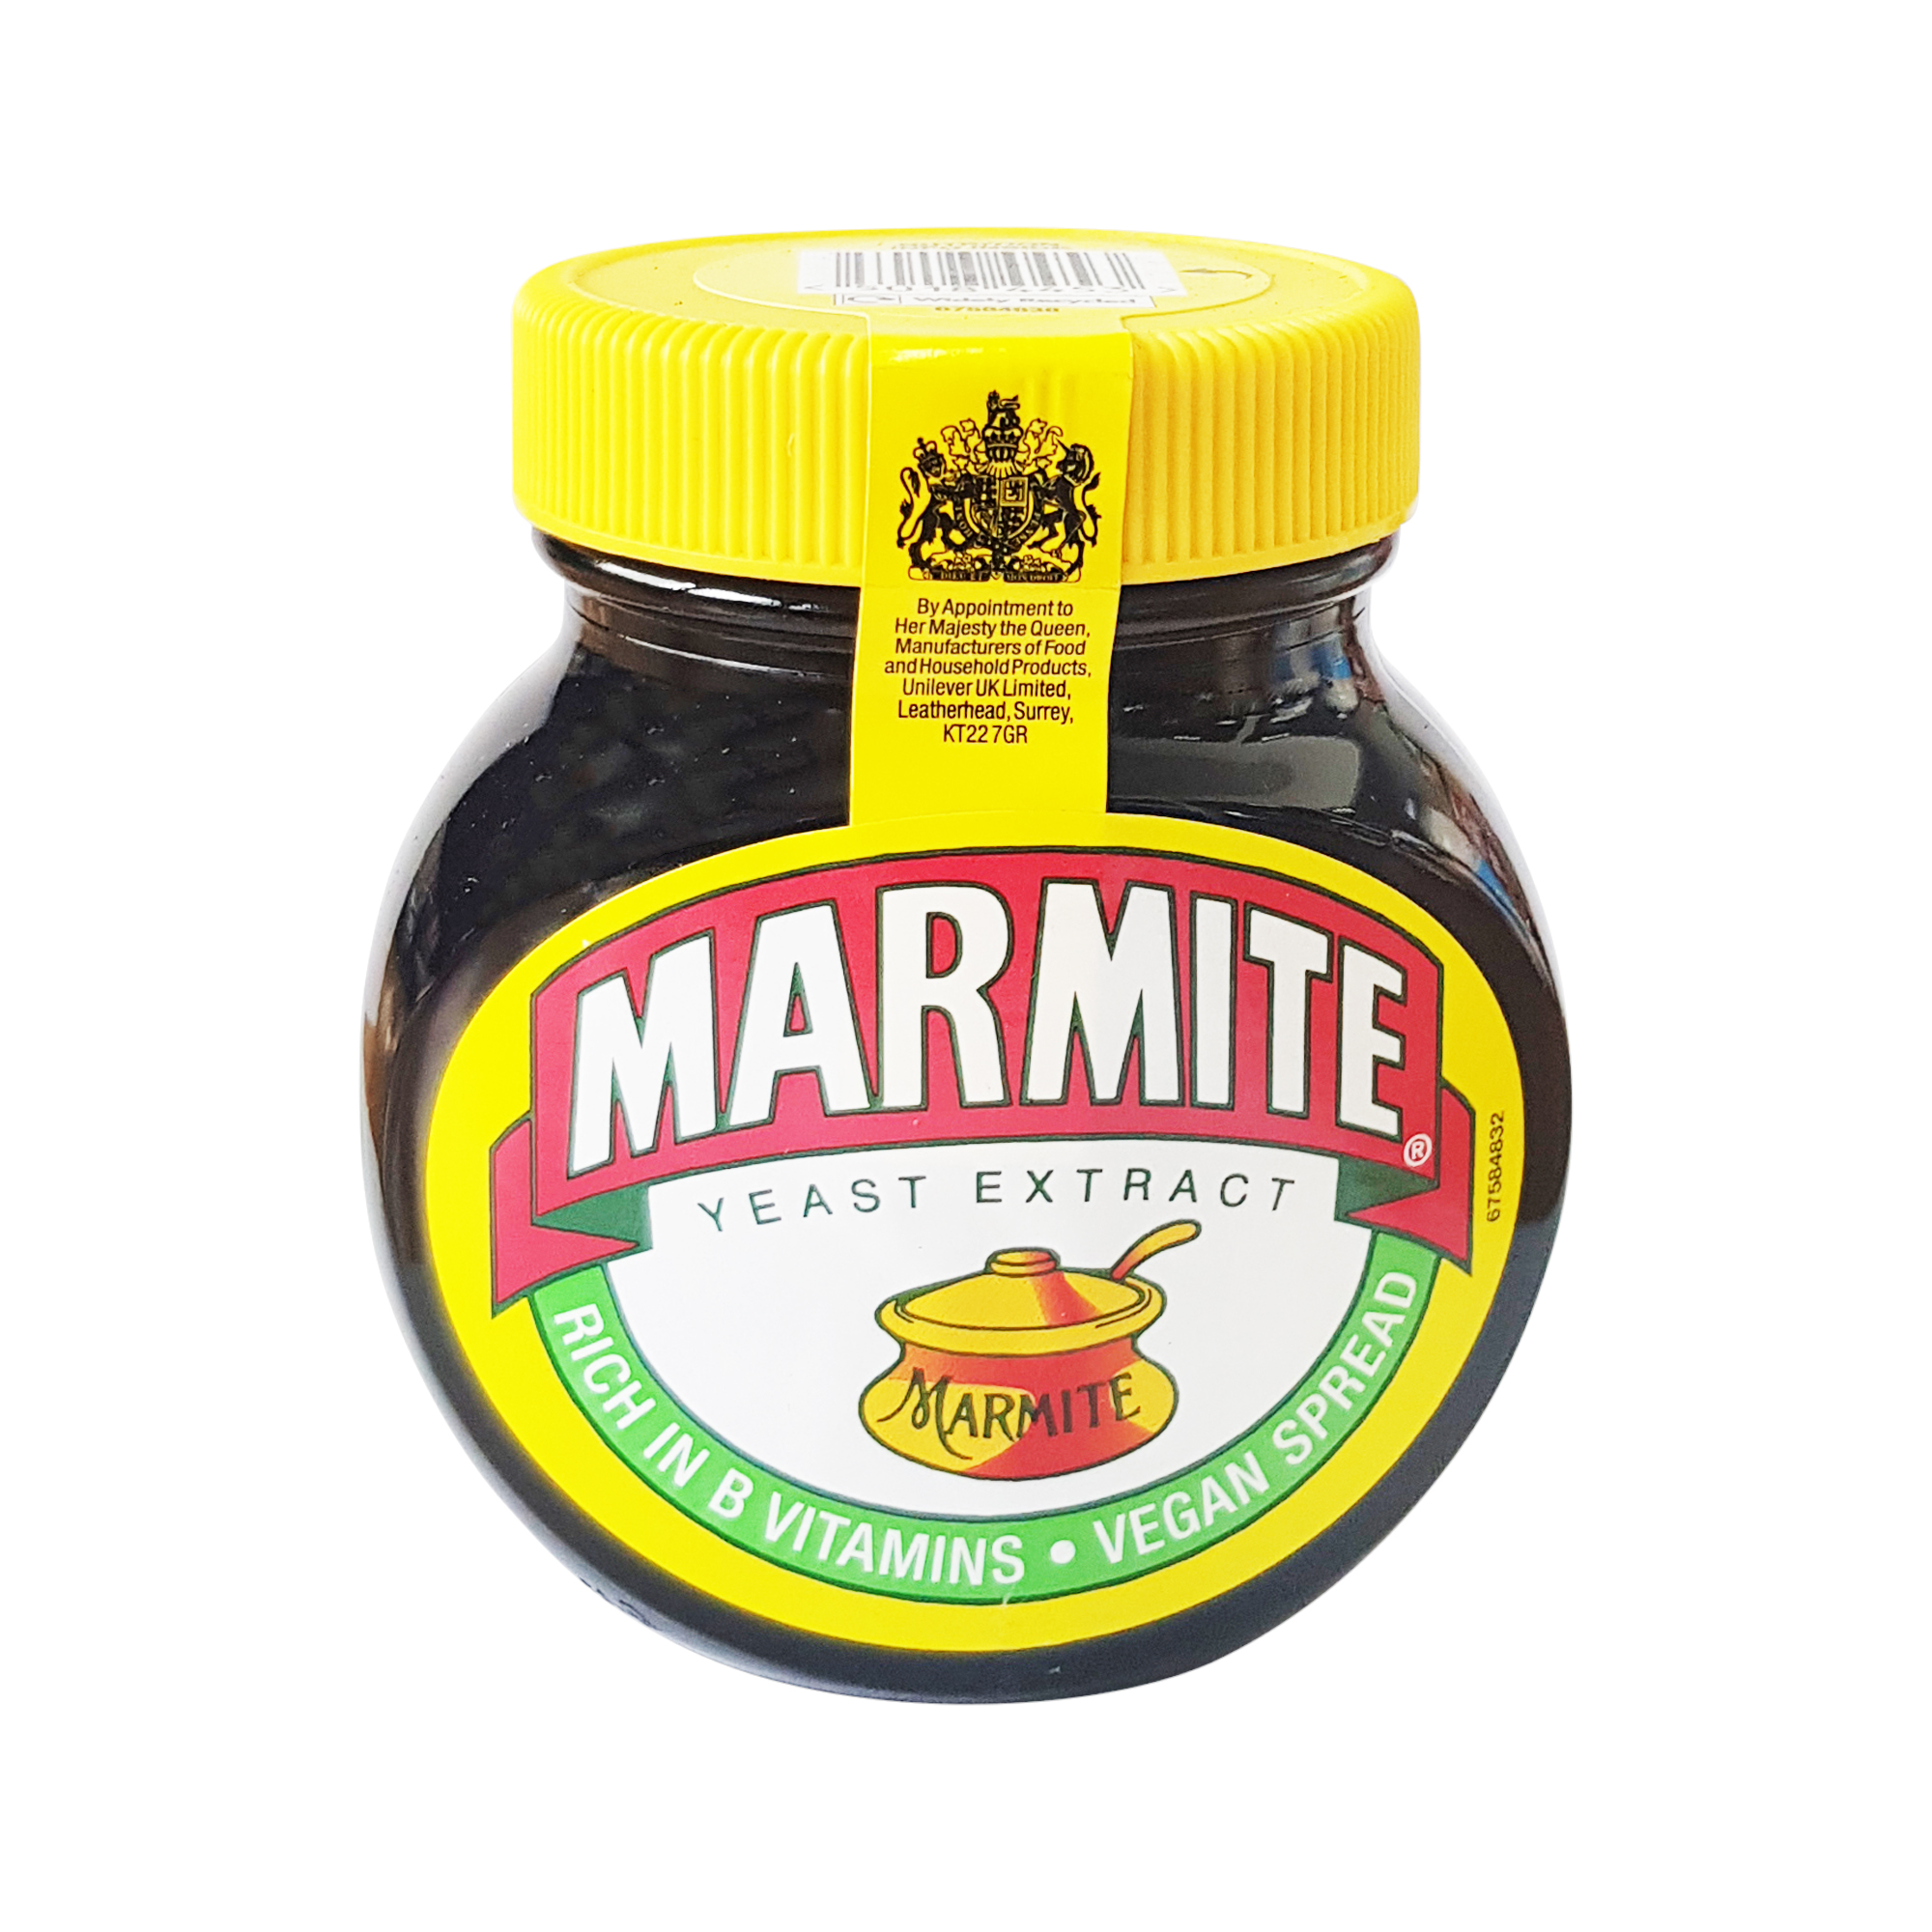 Marmite Yeast Extract Original (250g)